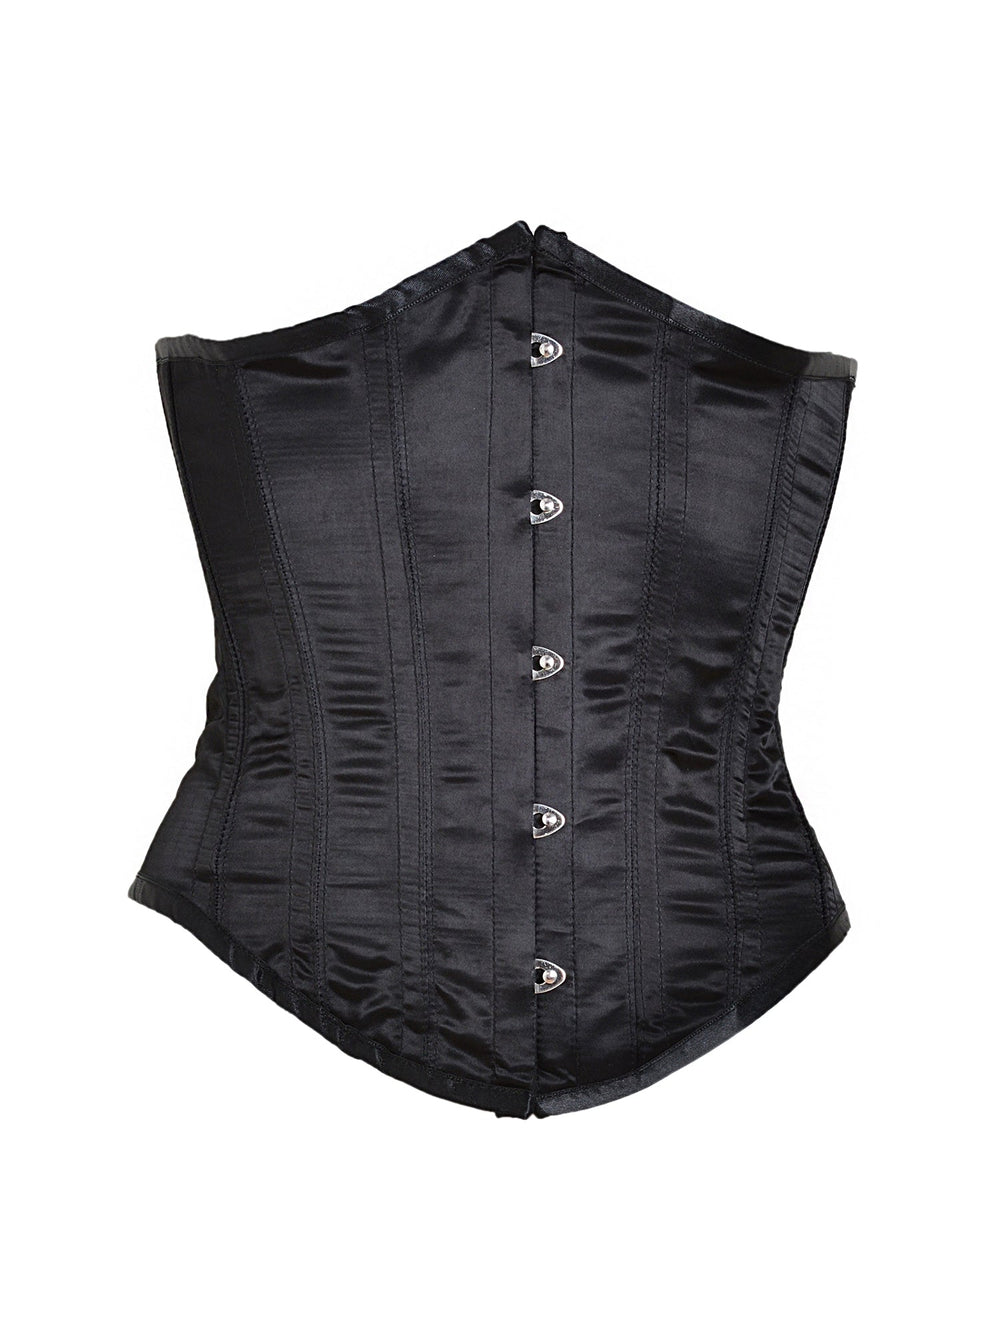 Black 4-Strap Satin Underbust Corset - Honour Clothing